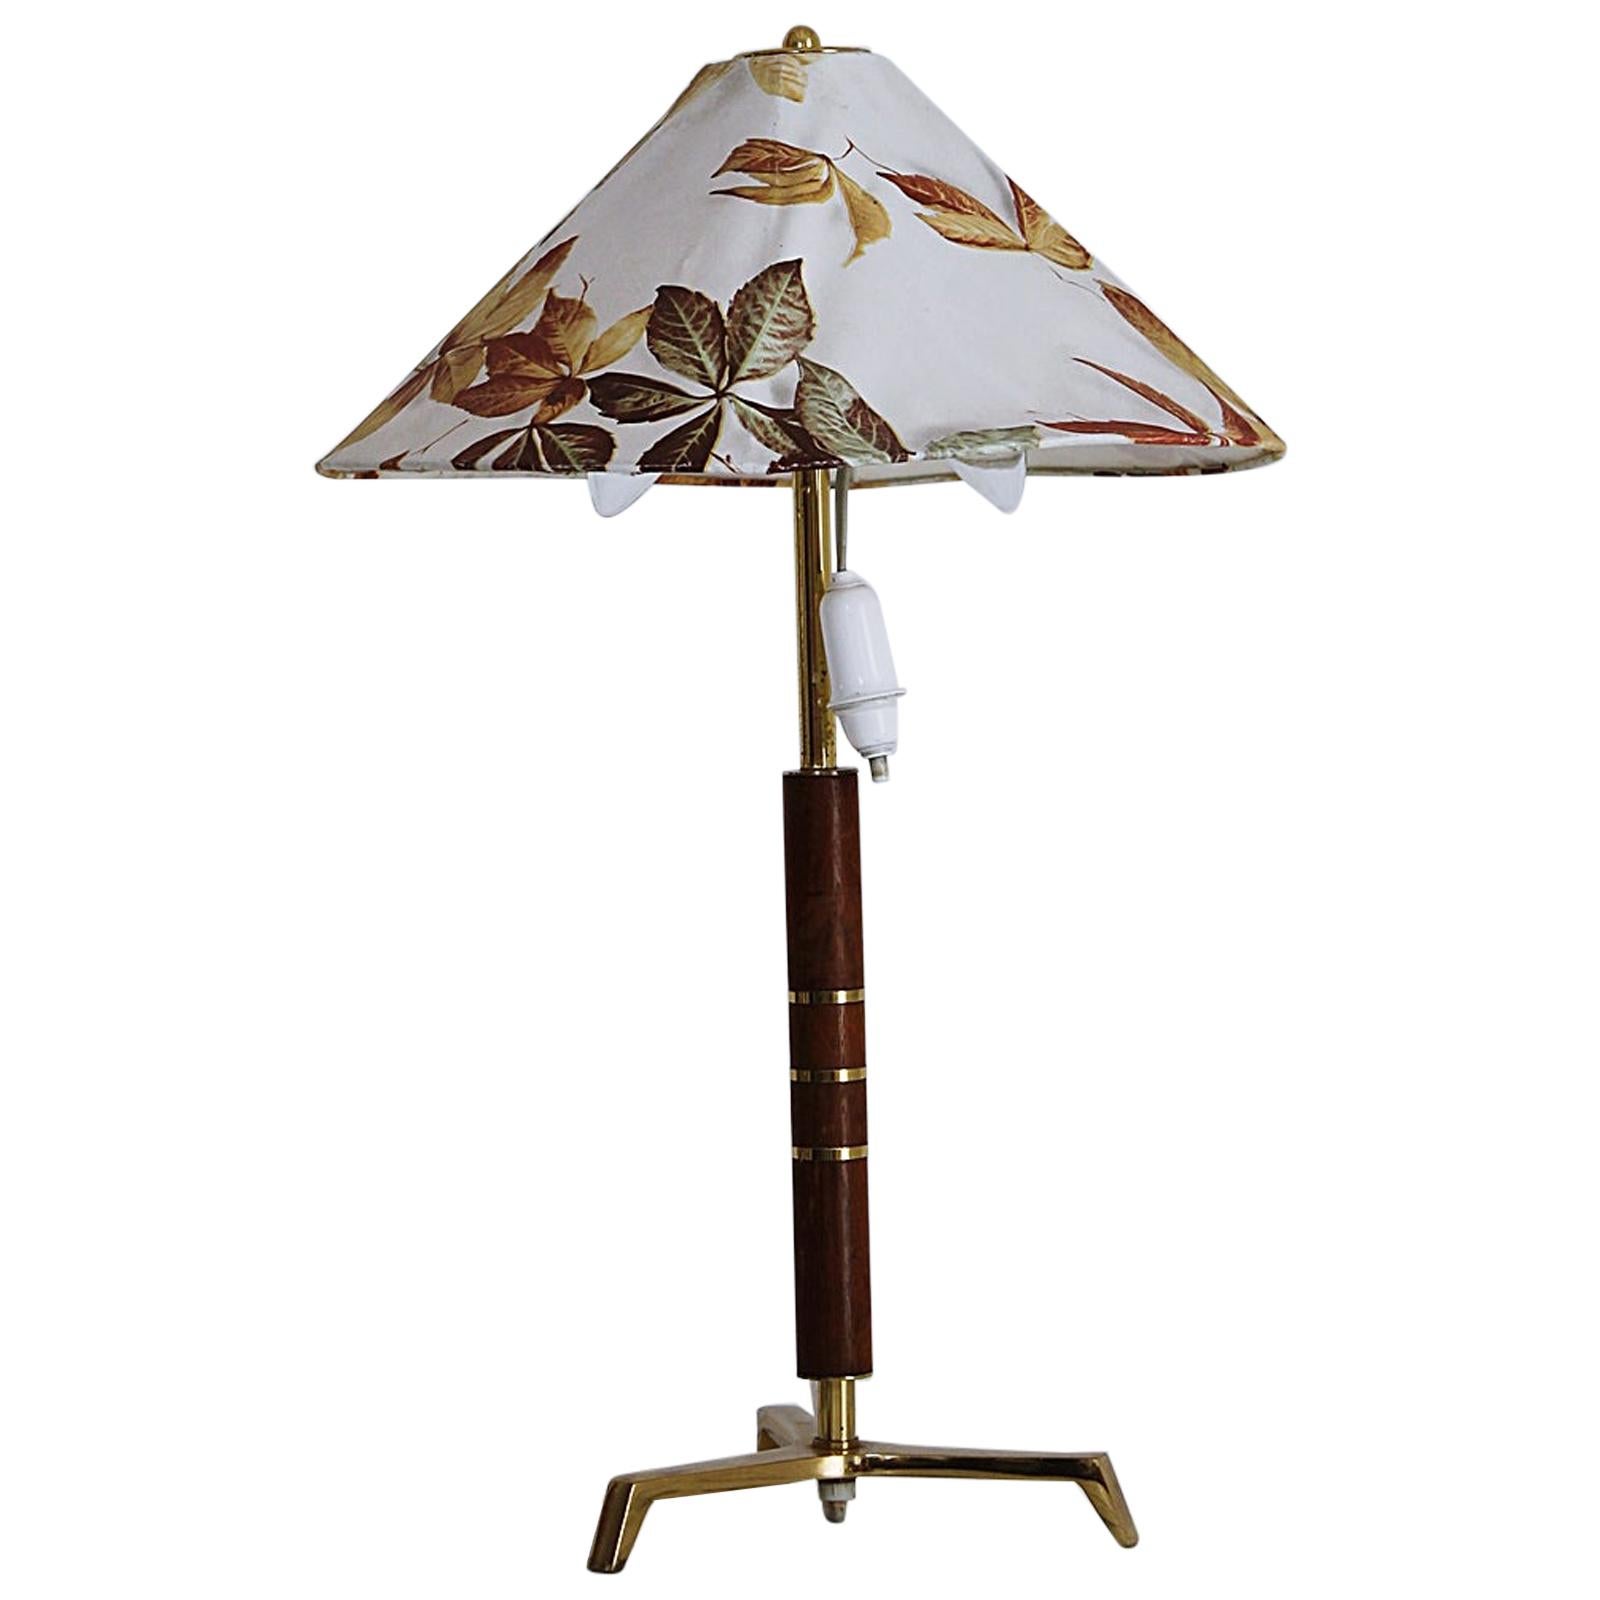 Rare Midcentury Tripod Table Lamp Attributed to J. T. Kalmar, Austria, 1950 For Sale